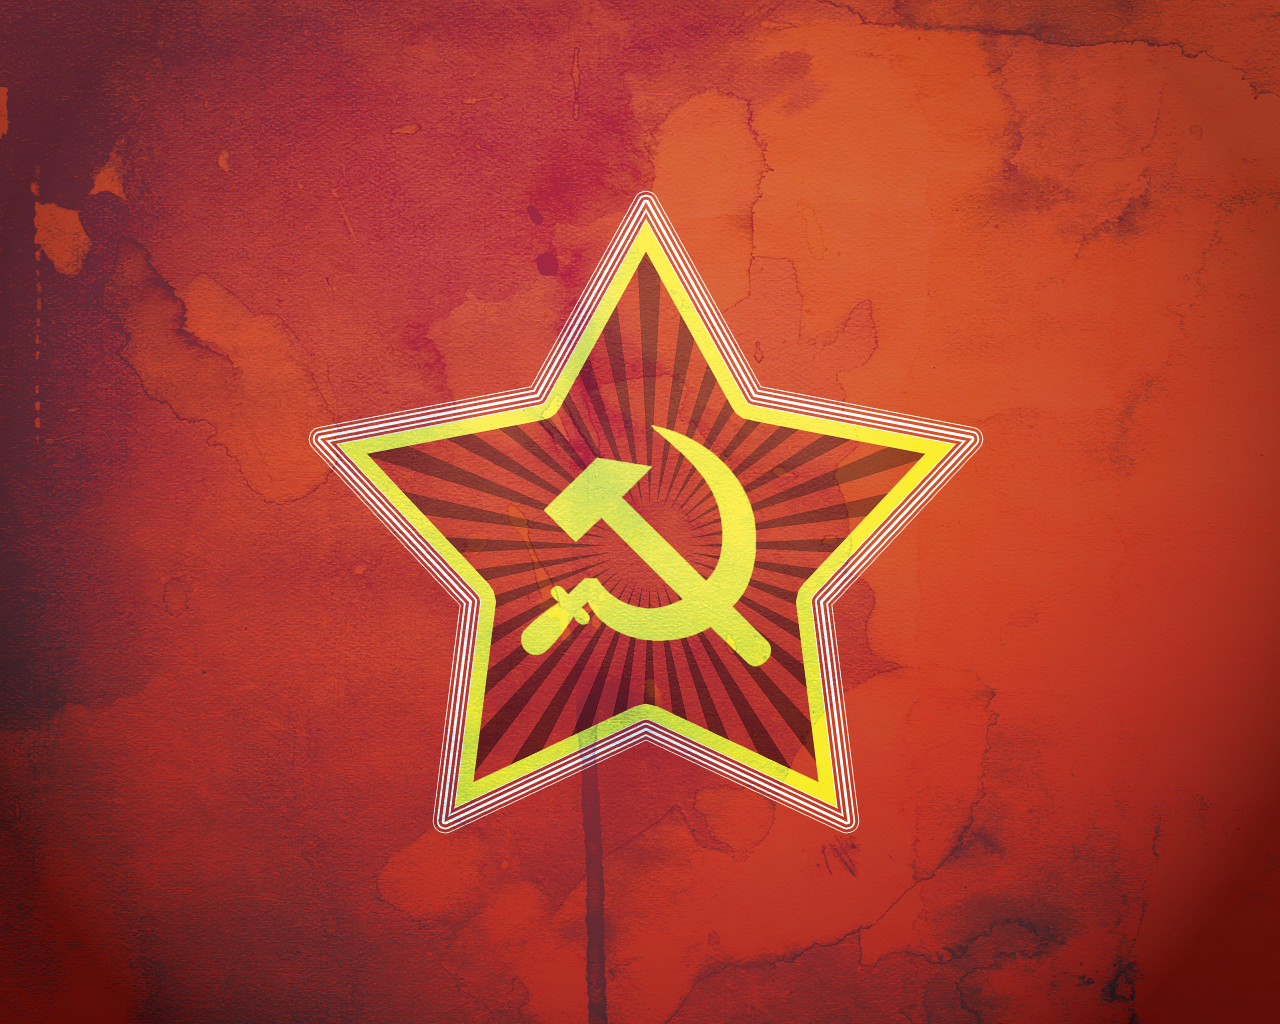 Soviet Star Wallpaper by spectravideo on